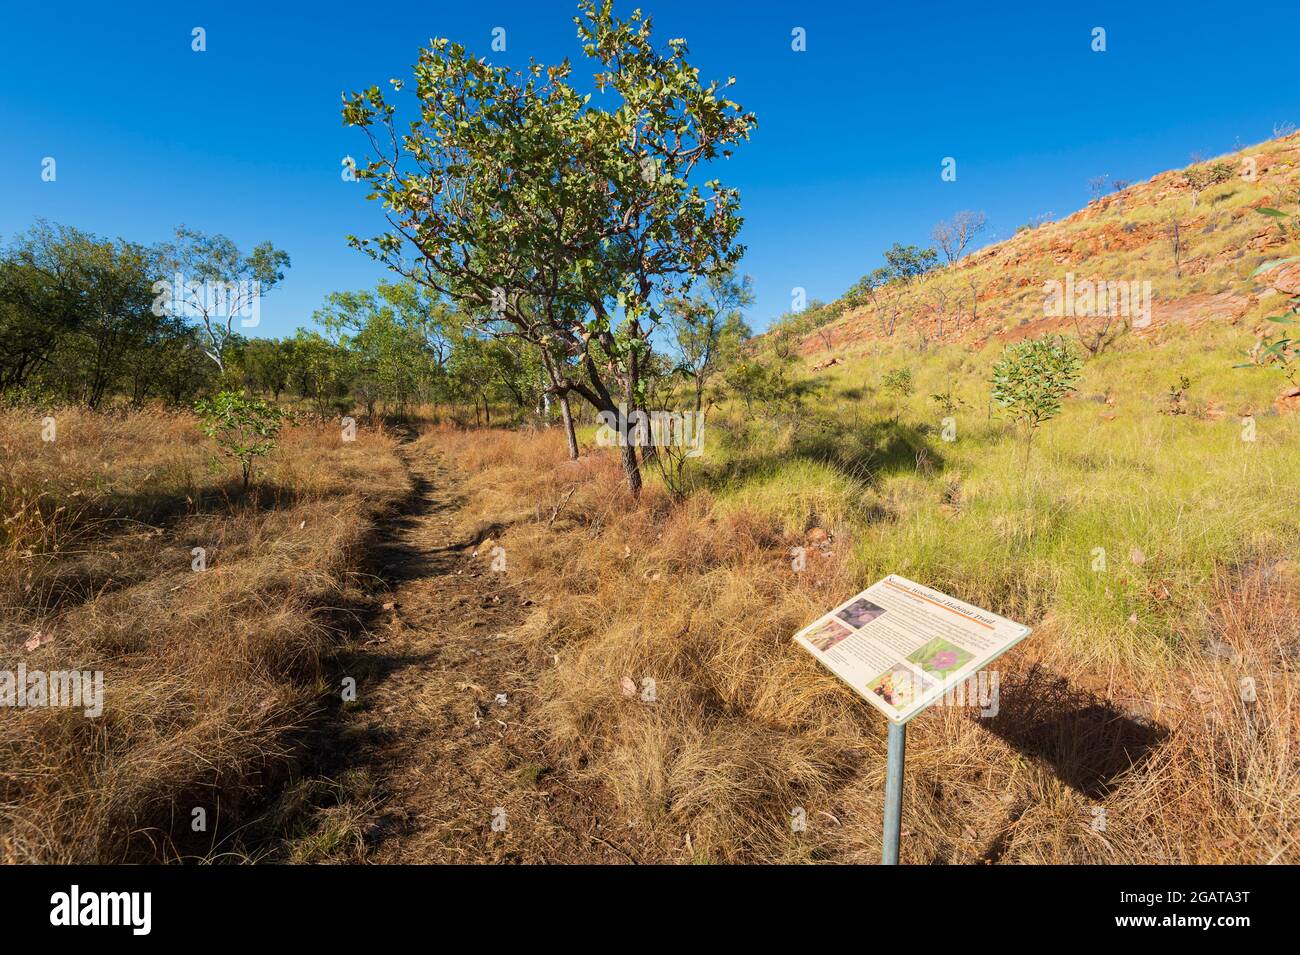 Interpretive sign along the Savannah Trail, Mornington Wilderness Camp, Kimberley Region, Western Australia, WA, Australia Stock Photo